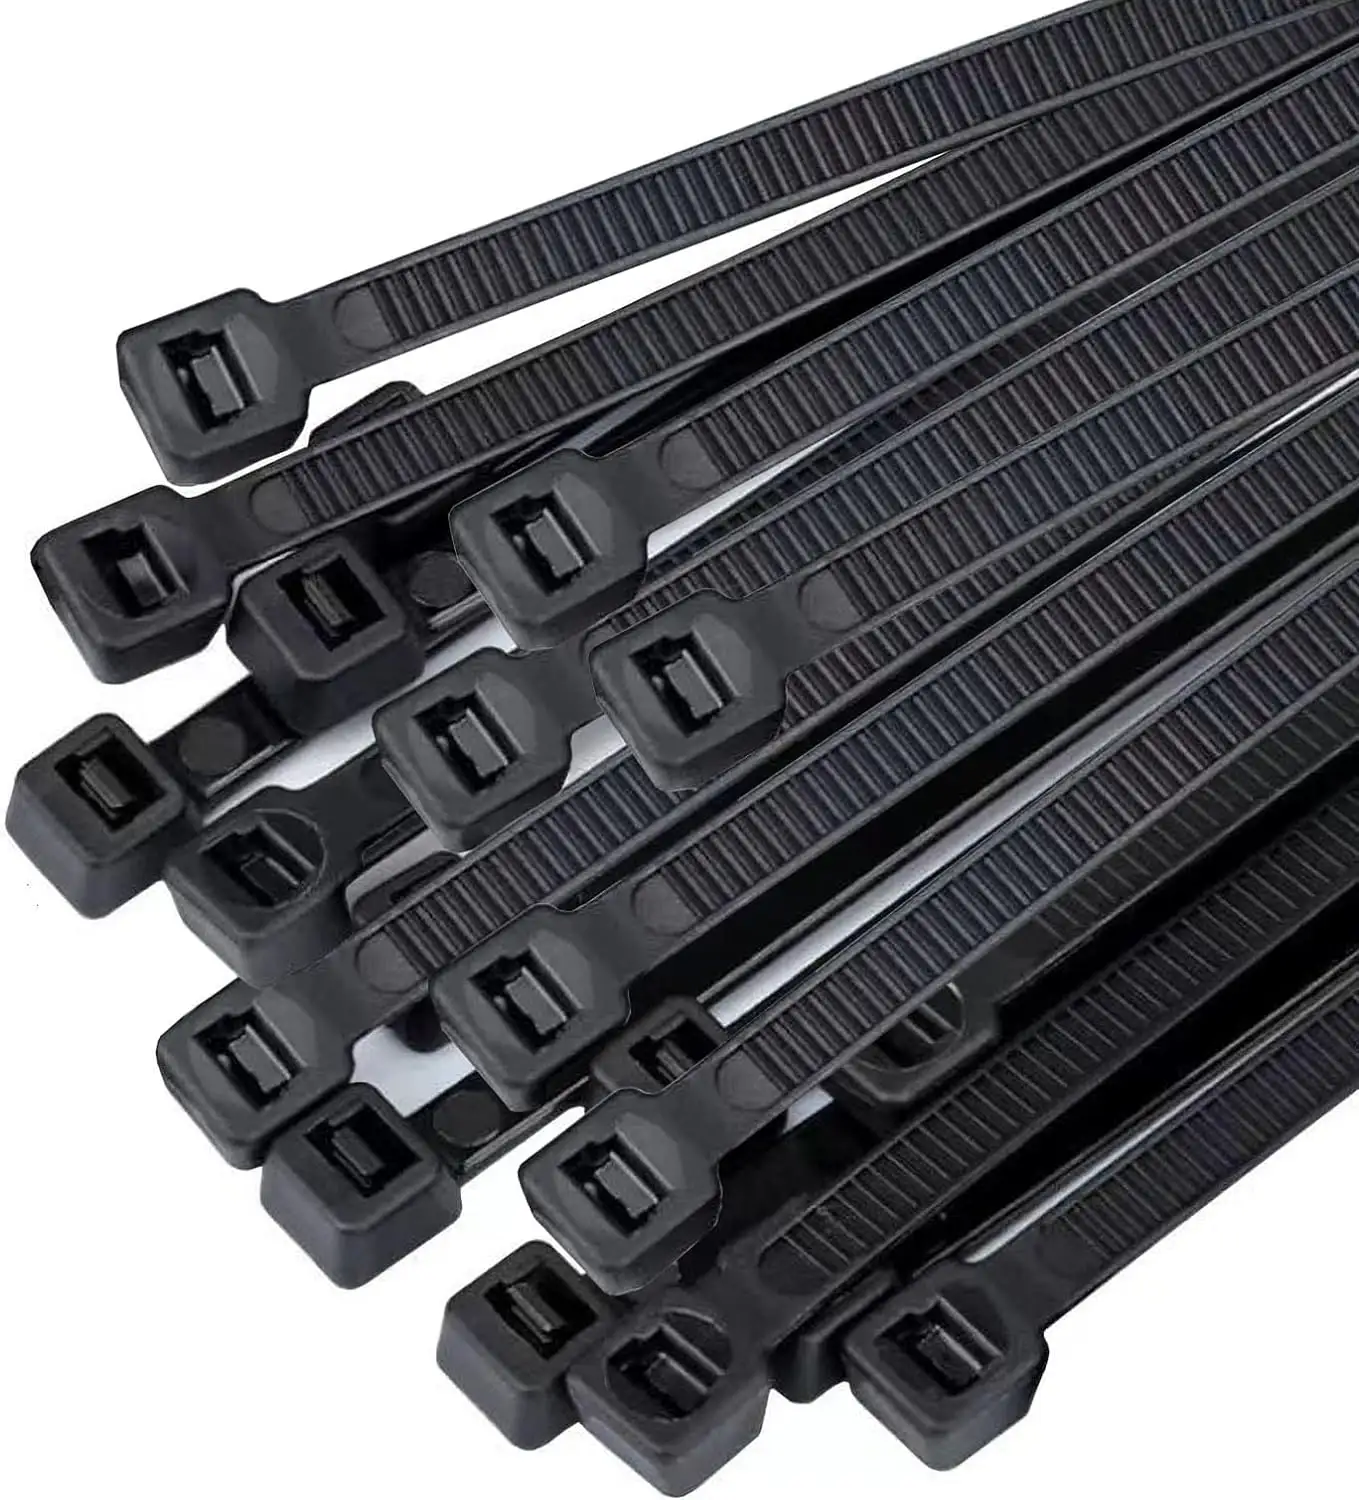 Large Zip Ties Long Cable Ties Nylon Plastic Self-locking Zip Ties 4 Inch Black Heavy Duty Outdoor18 Lbs Thick 100pcs Each Bag